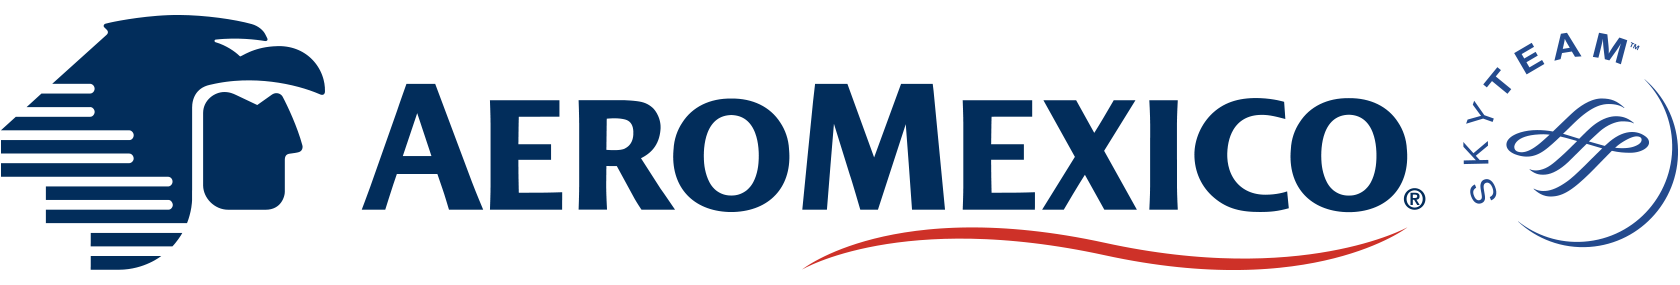 Aeromexico Announces